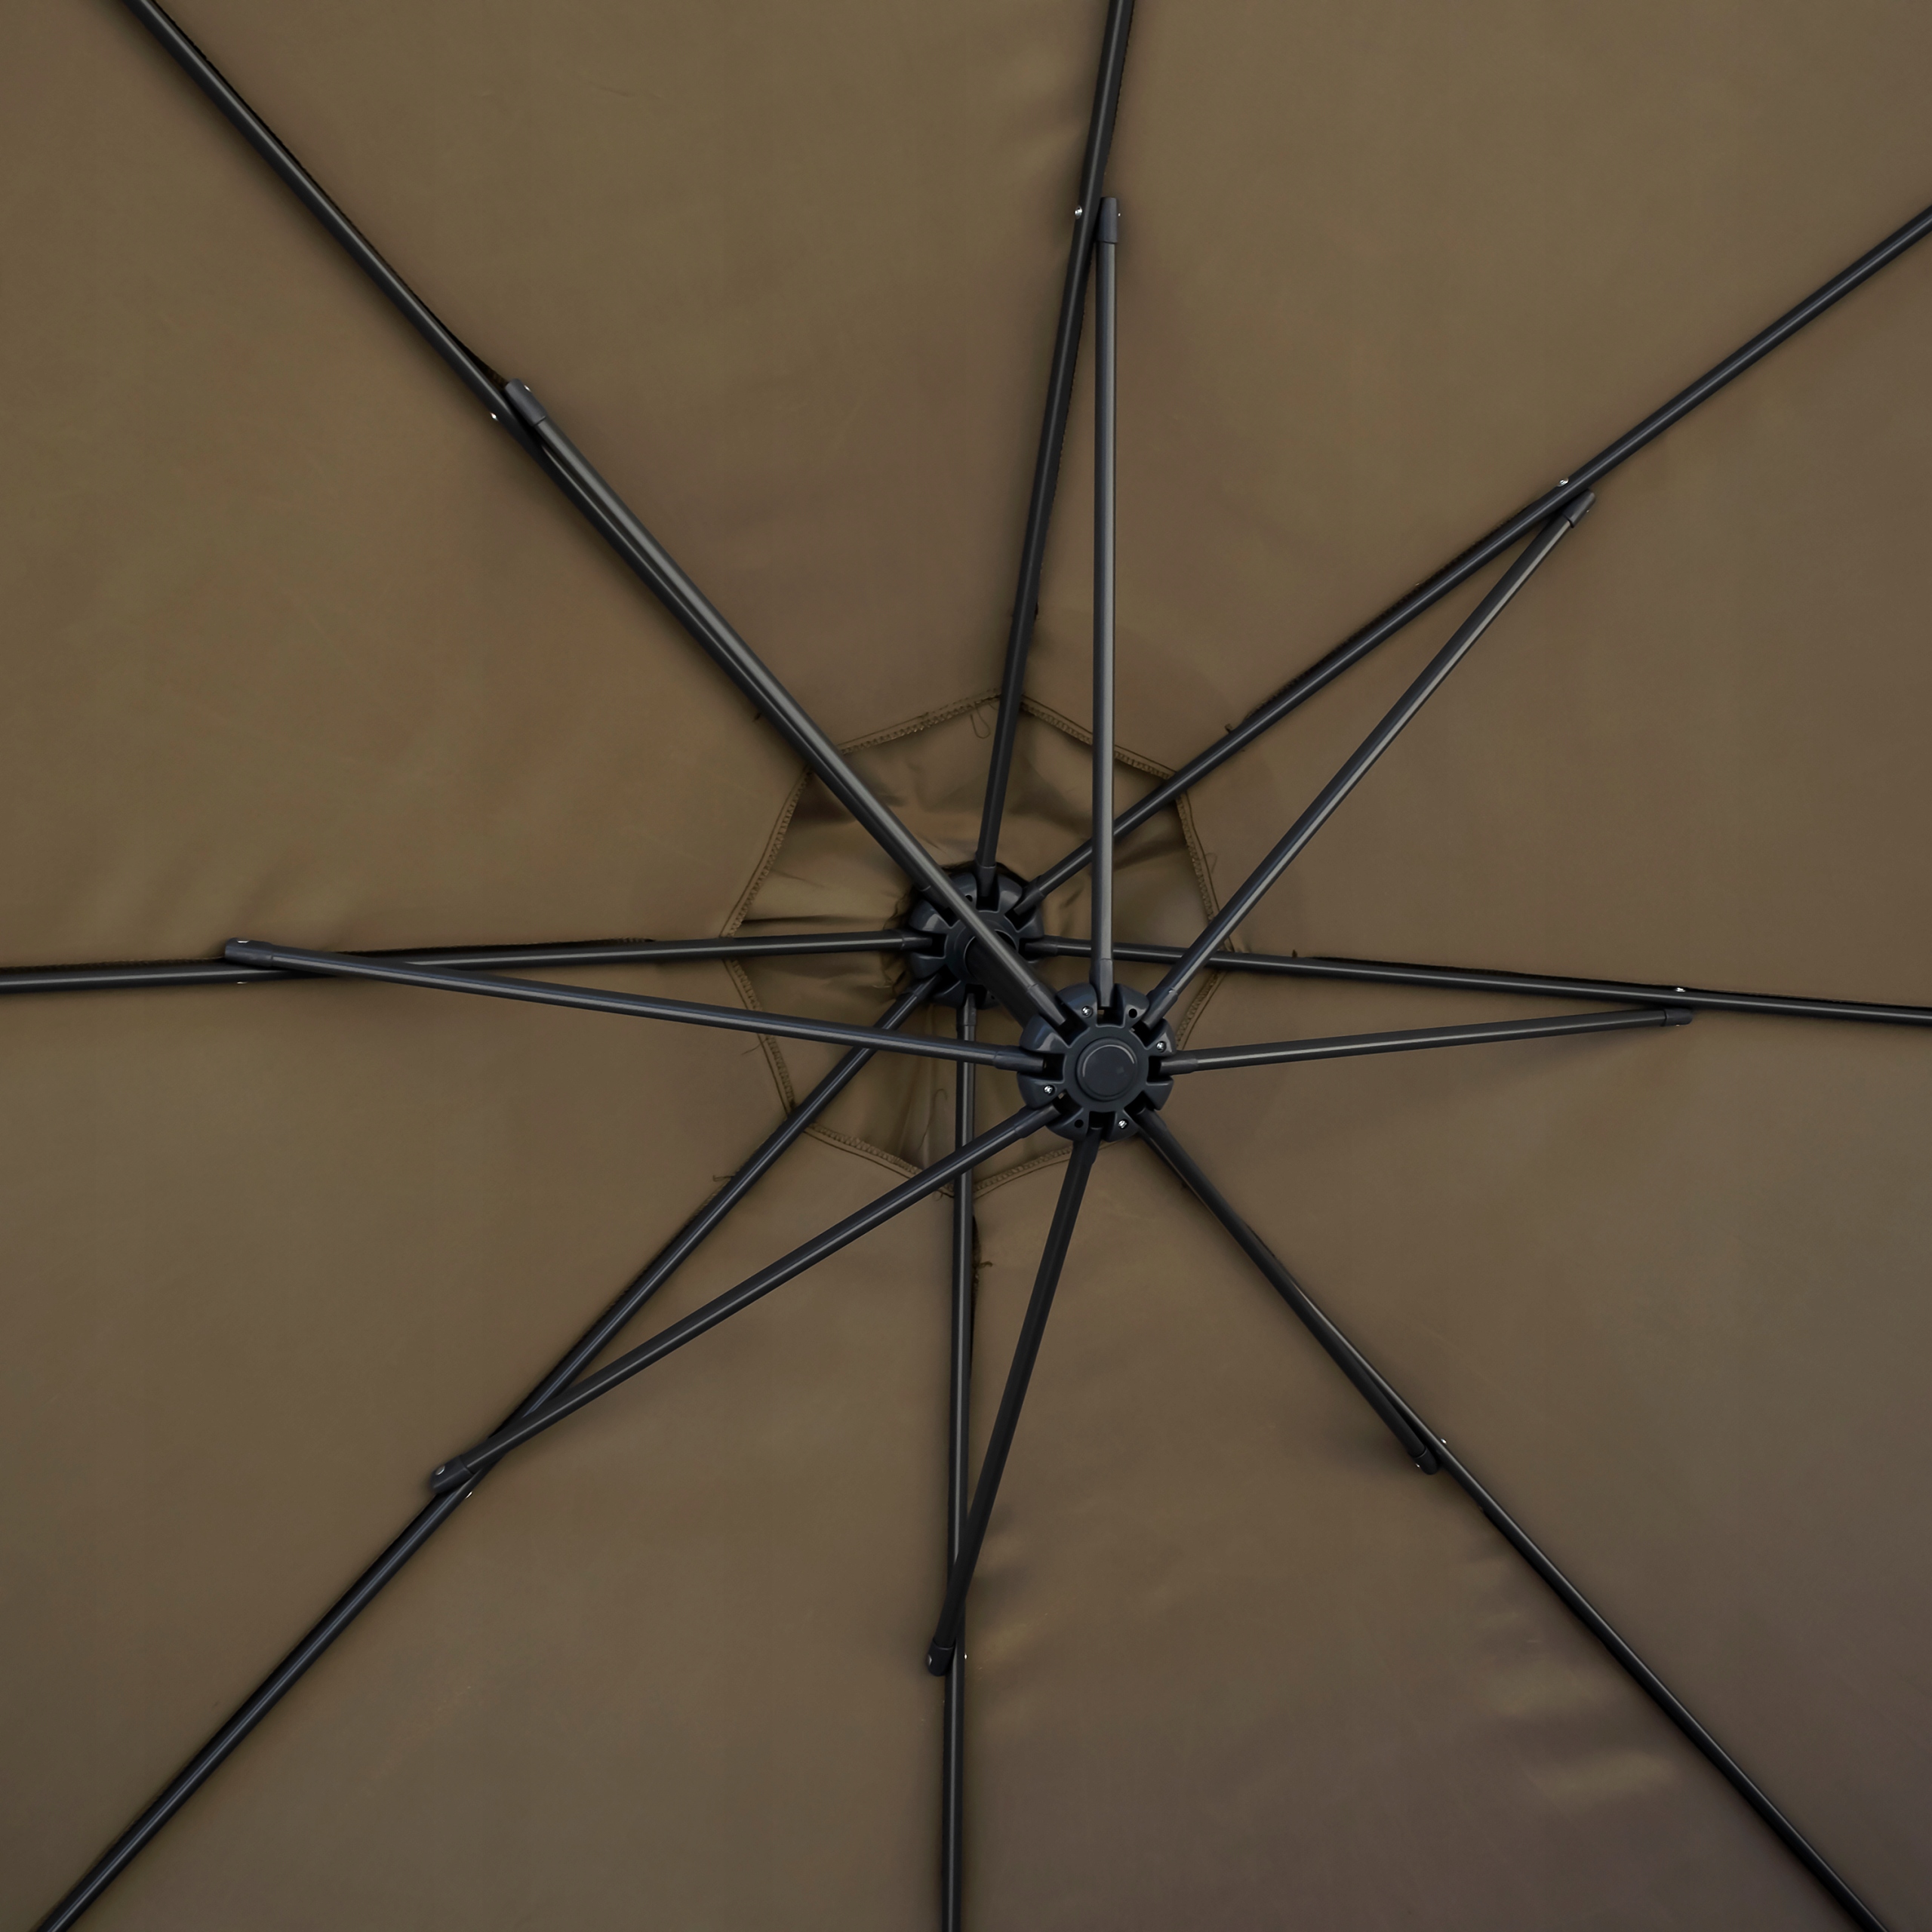 Duży parasol ogrodowy Sapphire ST-2020 Capri 350 cm